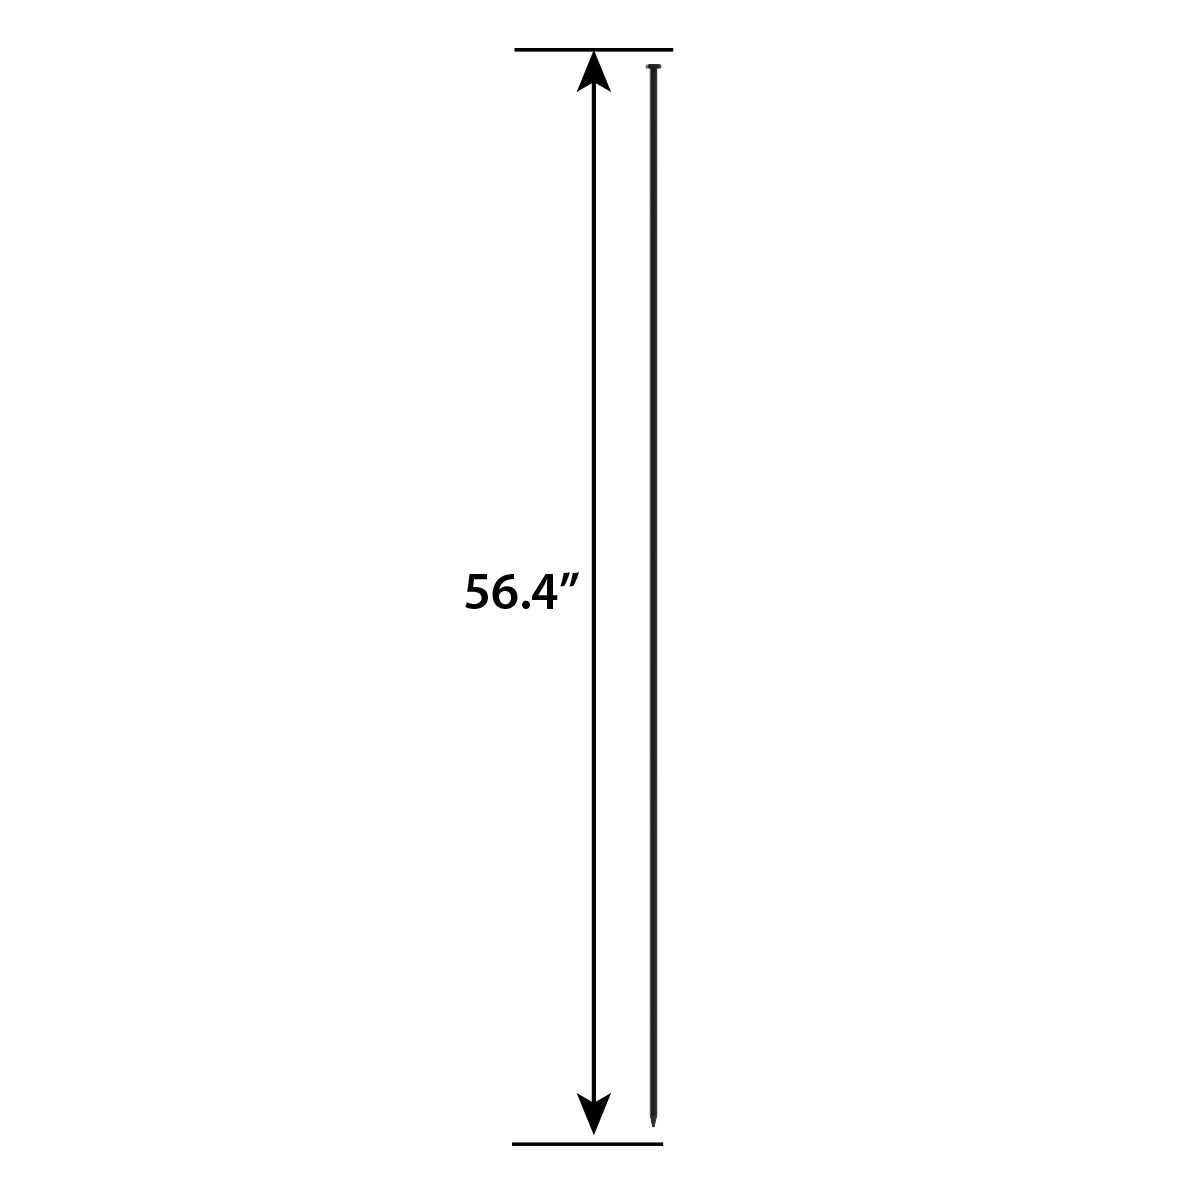 YARDLINK Multi-Purpose Fence 4-1/2-ft H x 1-1/2-in W Black Steel